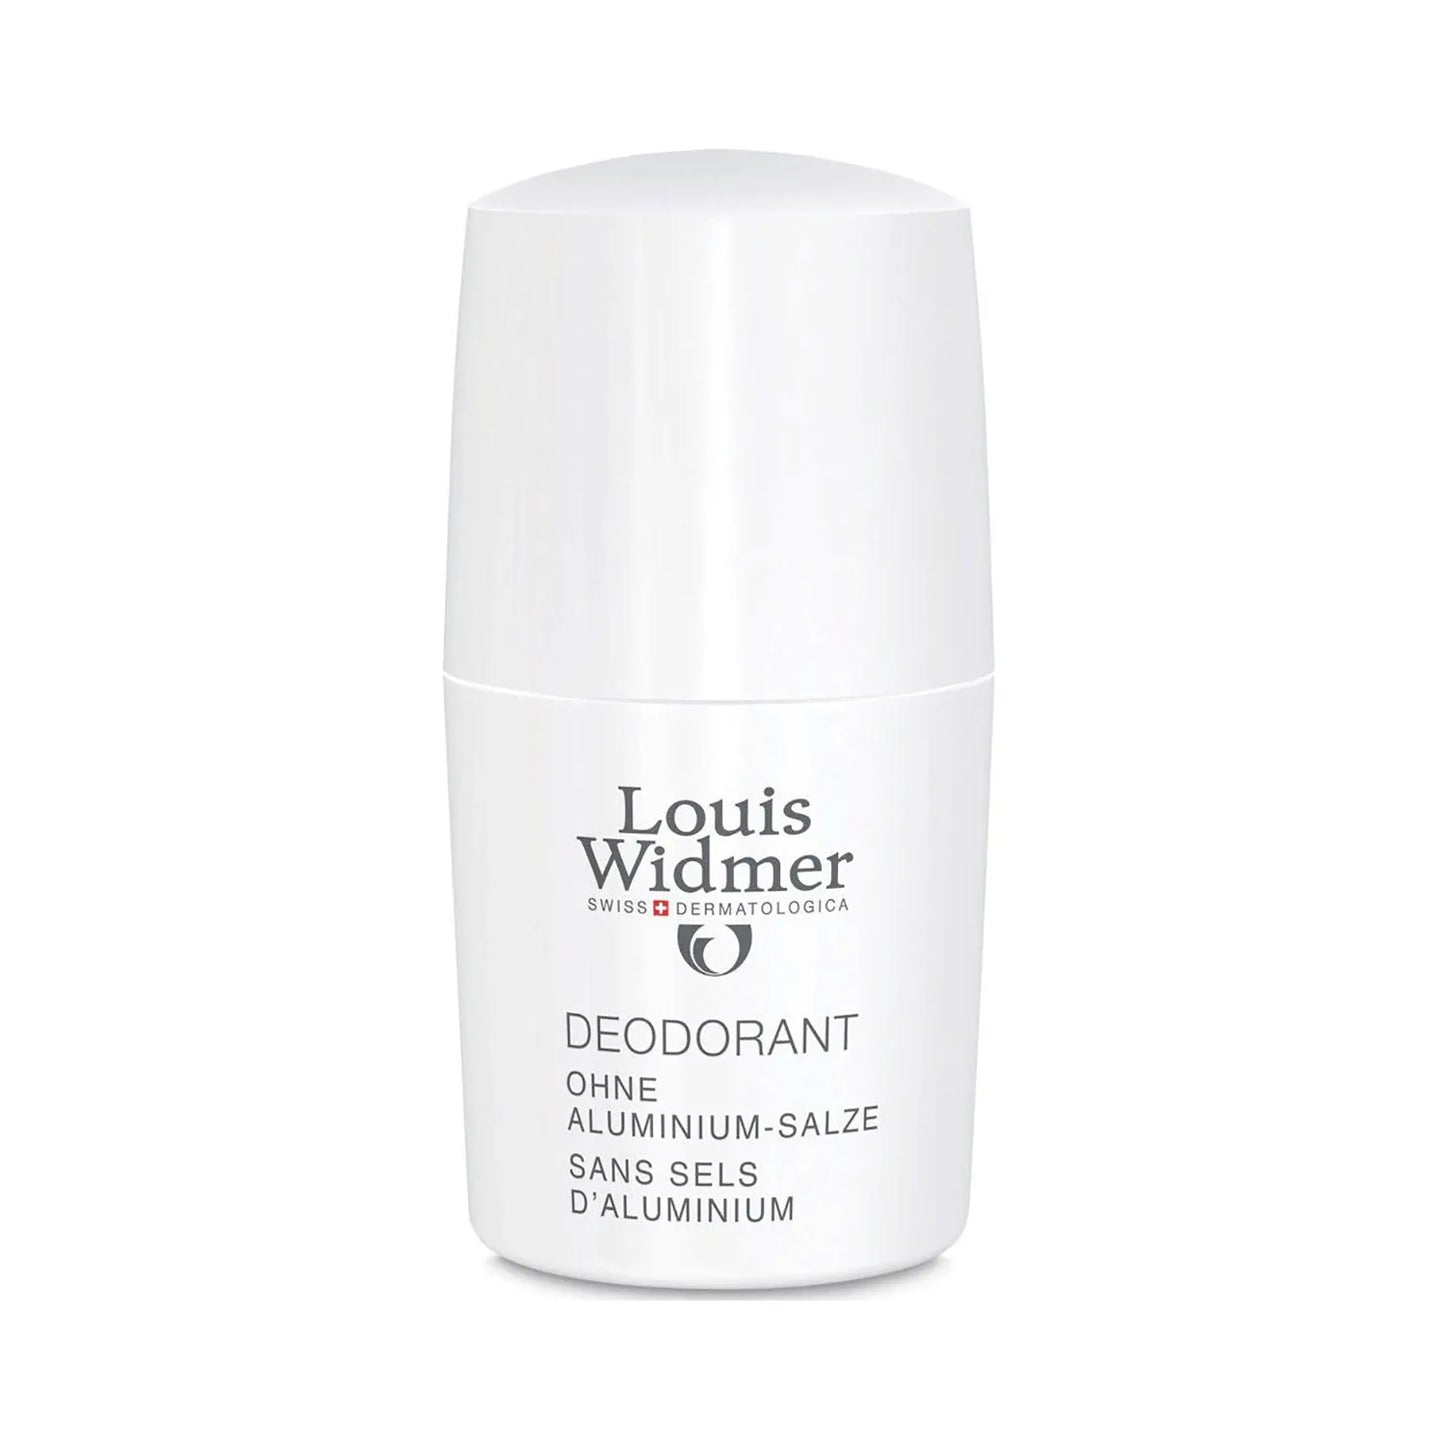 Louis Widmer Deodorant Aluminium Salts free Roll on Non-Scented 50ml